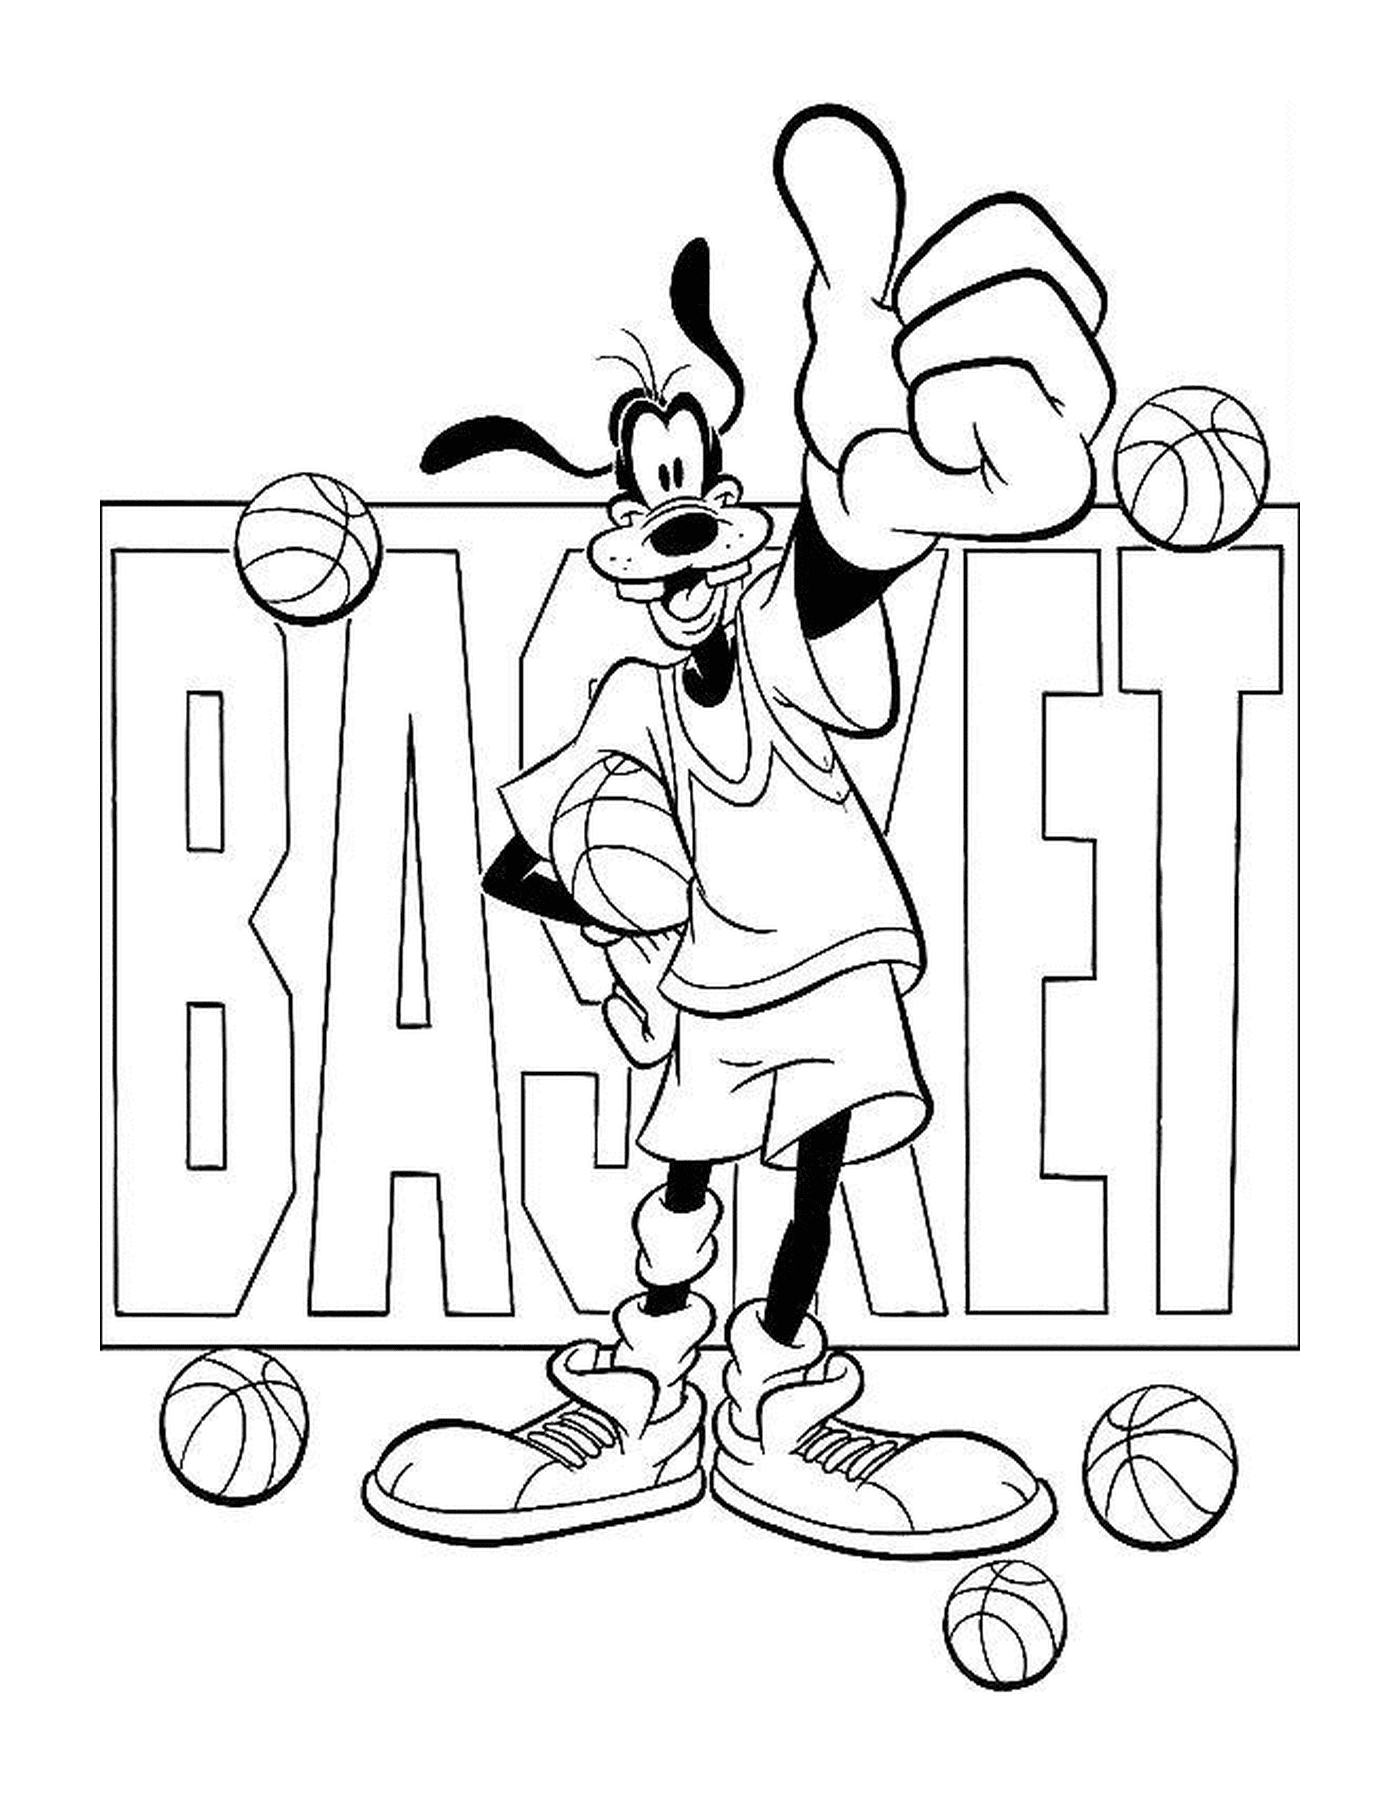  Dingo mag Basketball und hält einen Ball vor dem Wort Korb 